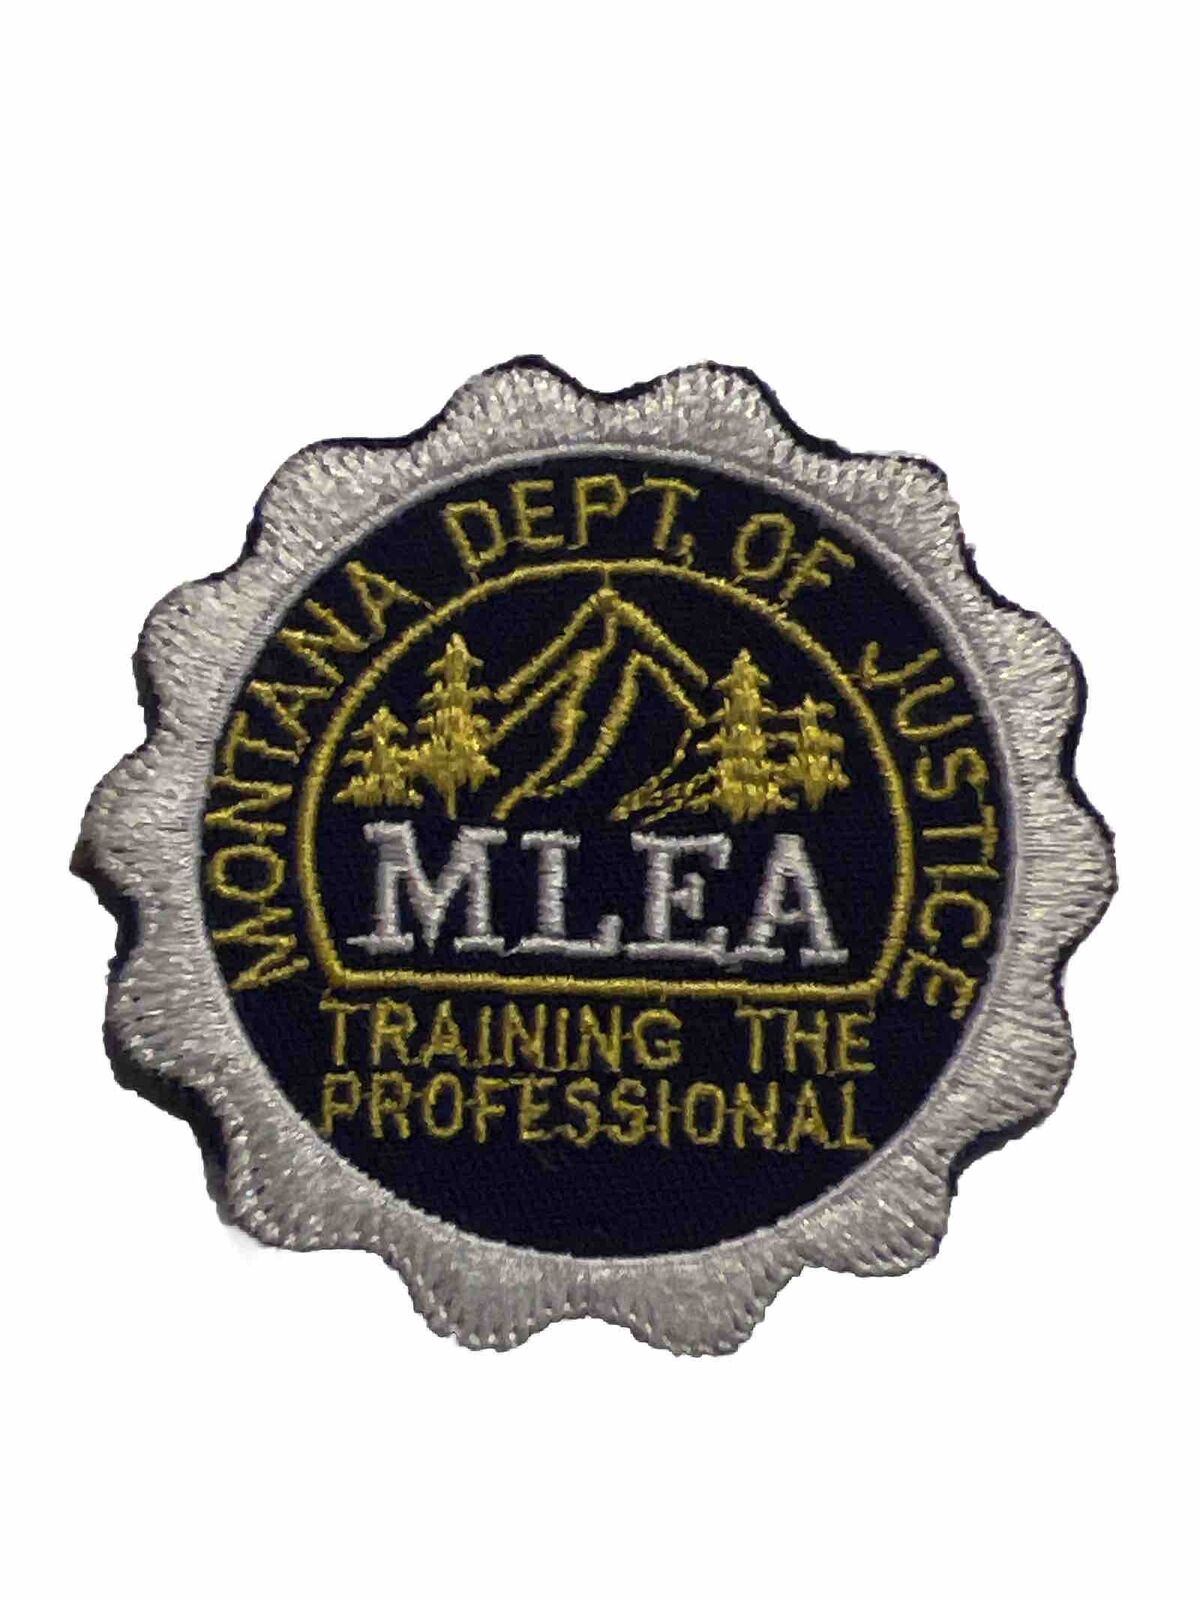 Vintage Montana Dept of Justice Training, the  Professional - Shoulder Patch